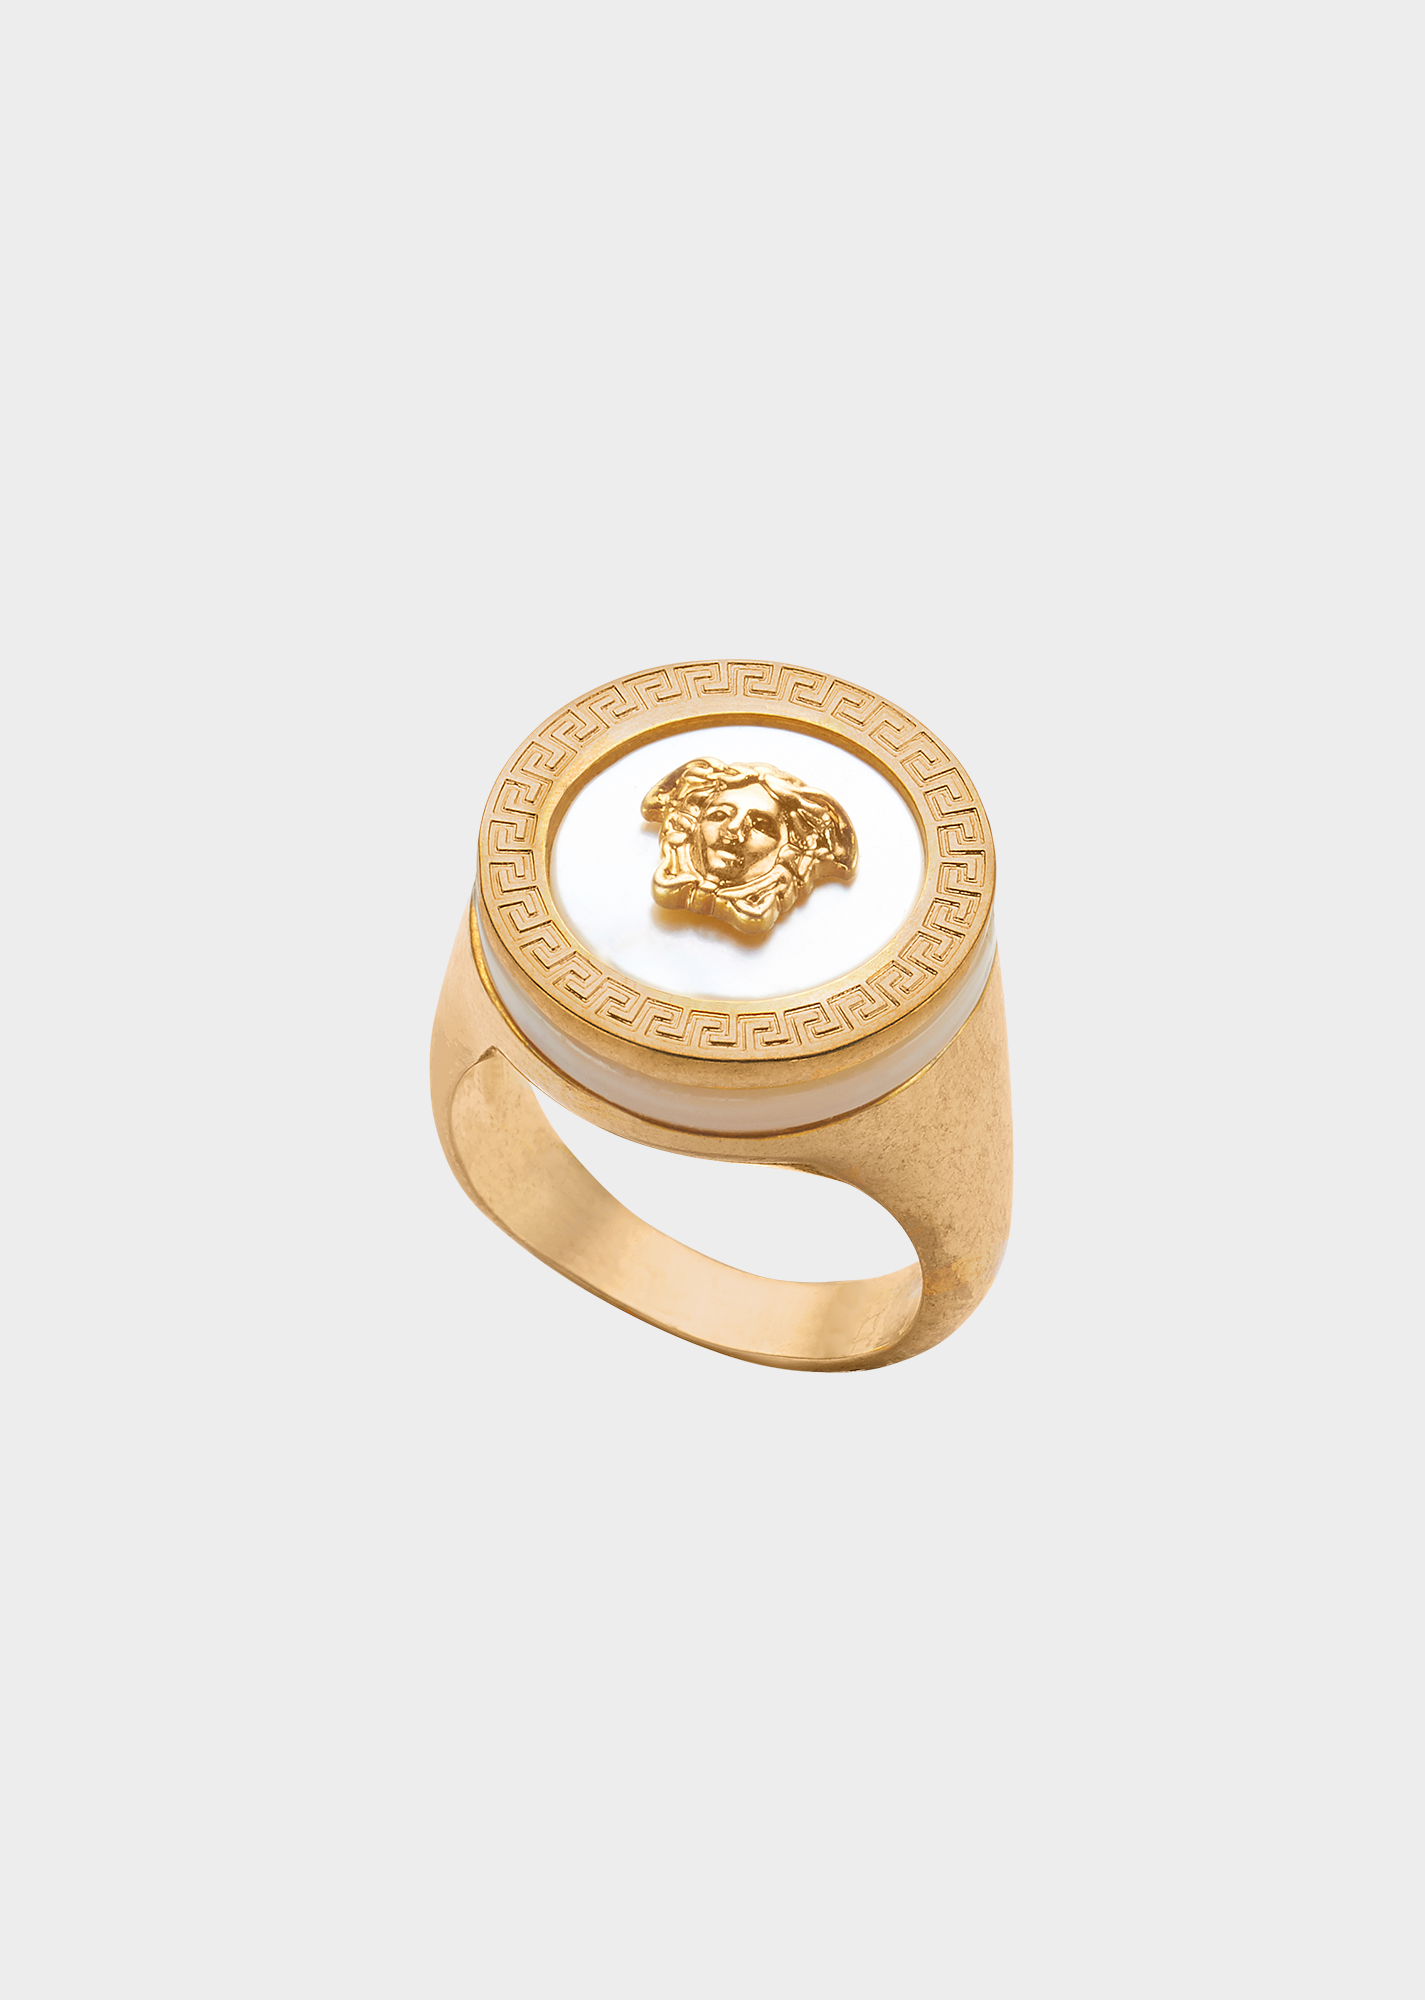 donatella versace wedding ring